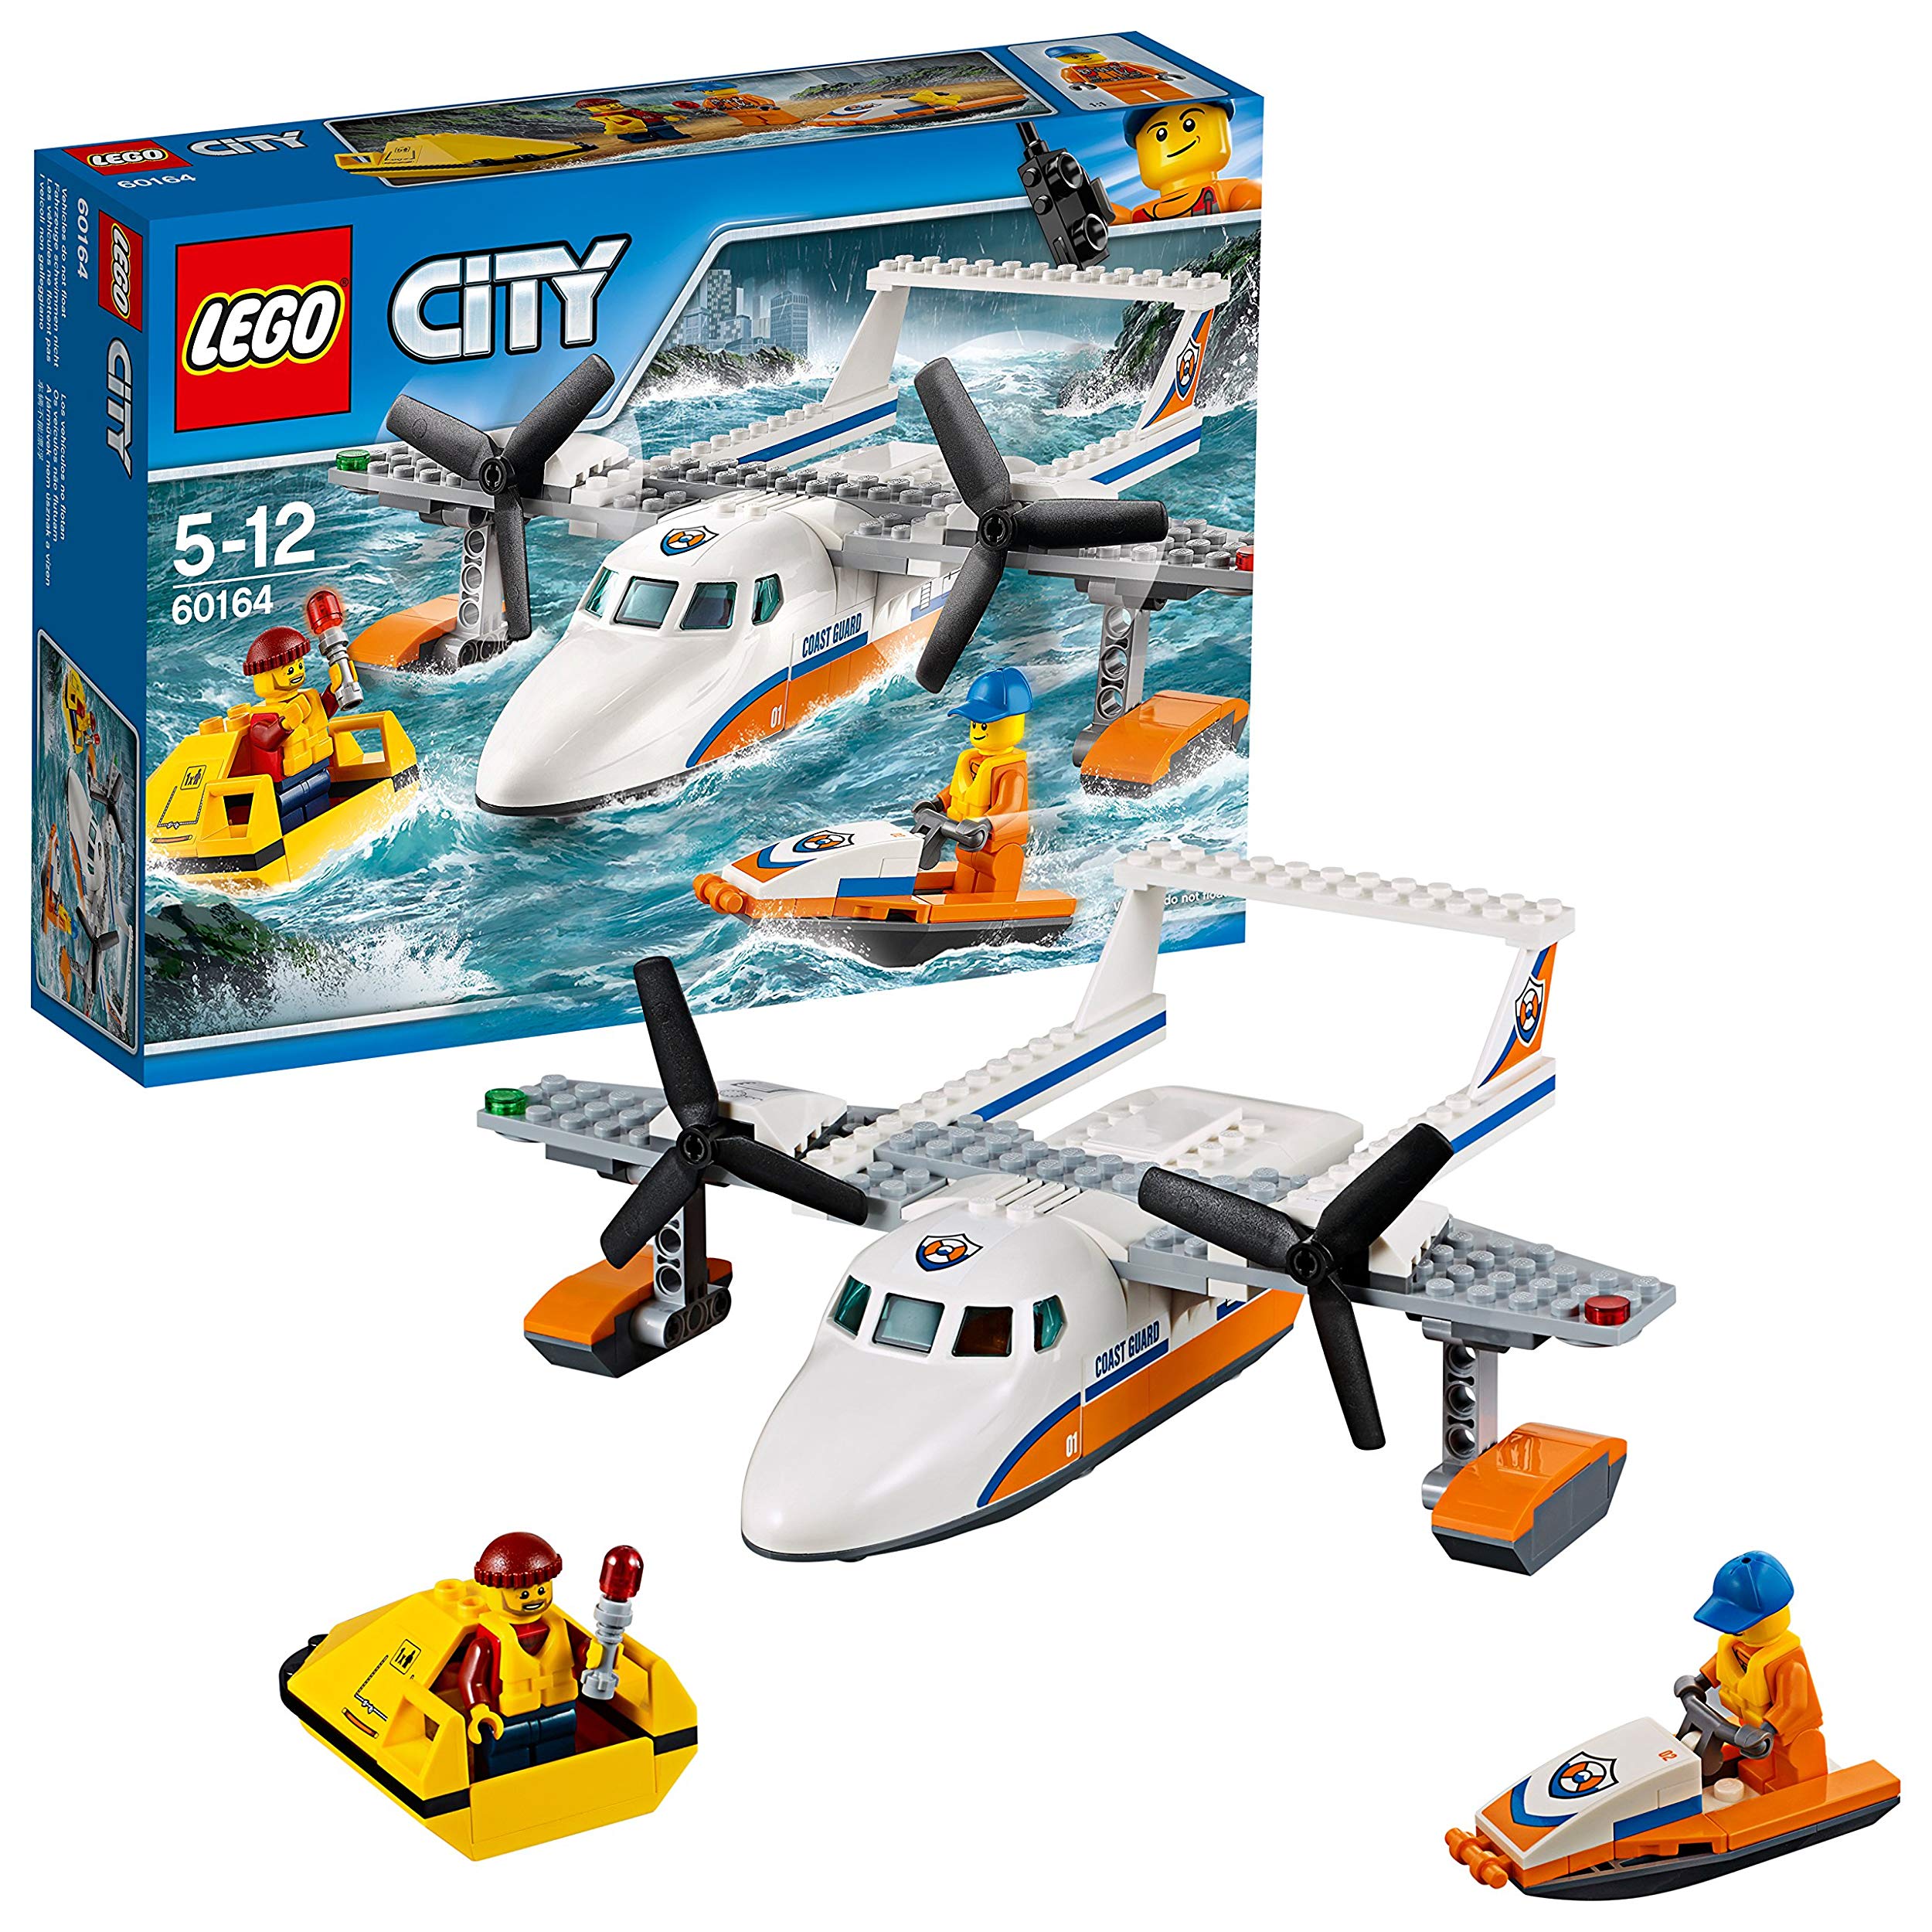 Lego City Rescue Plane